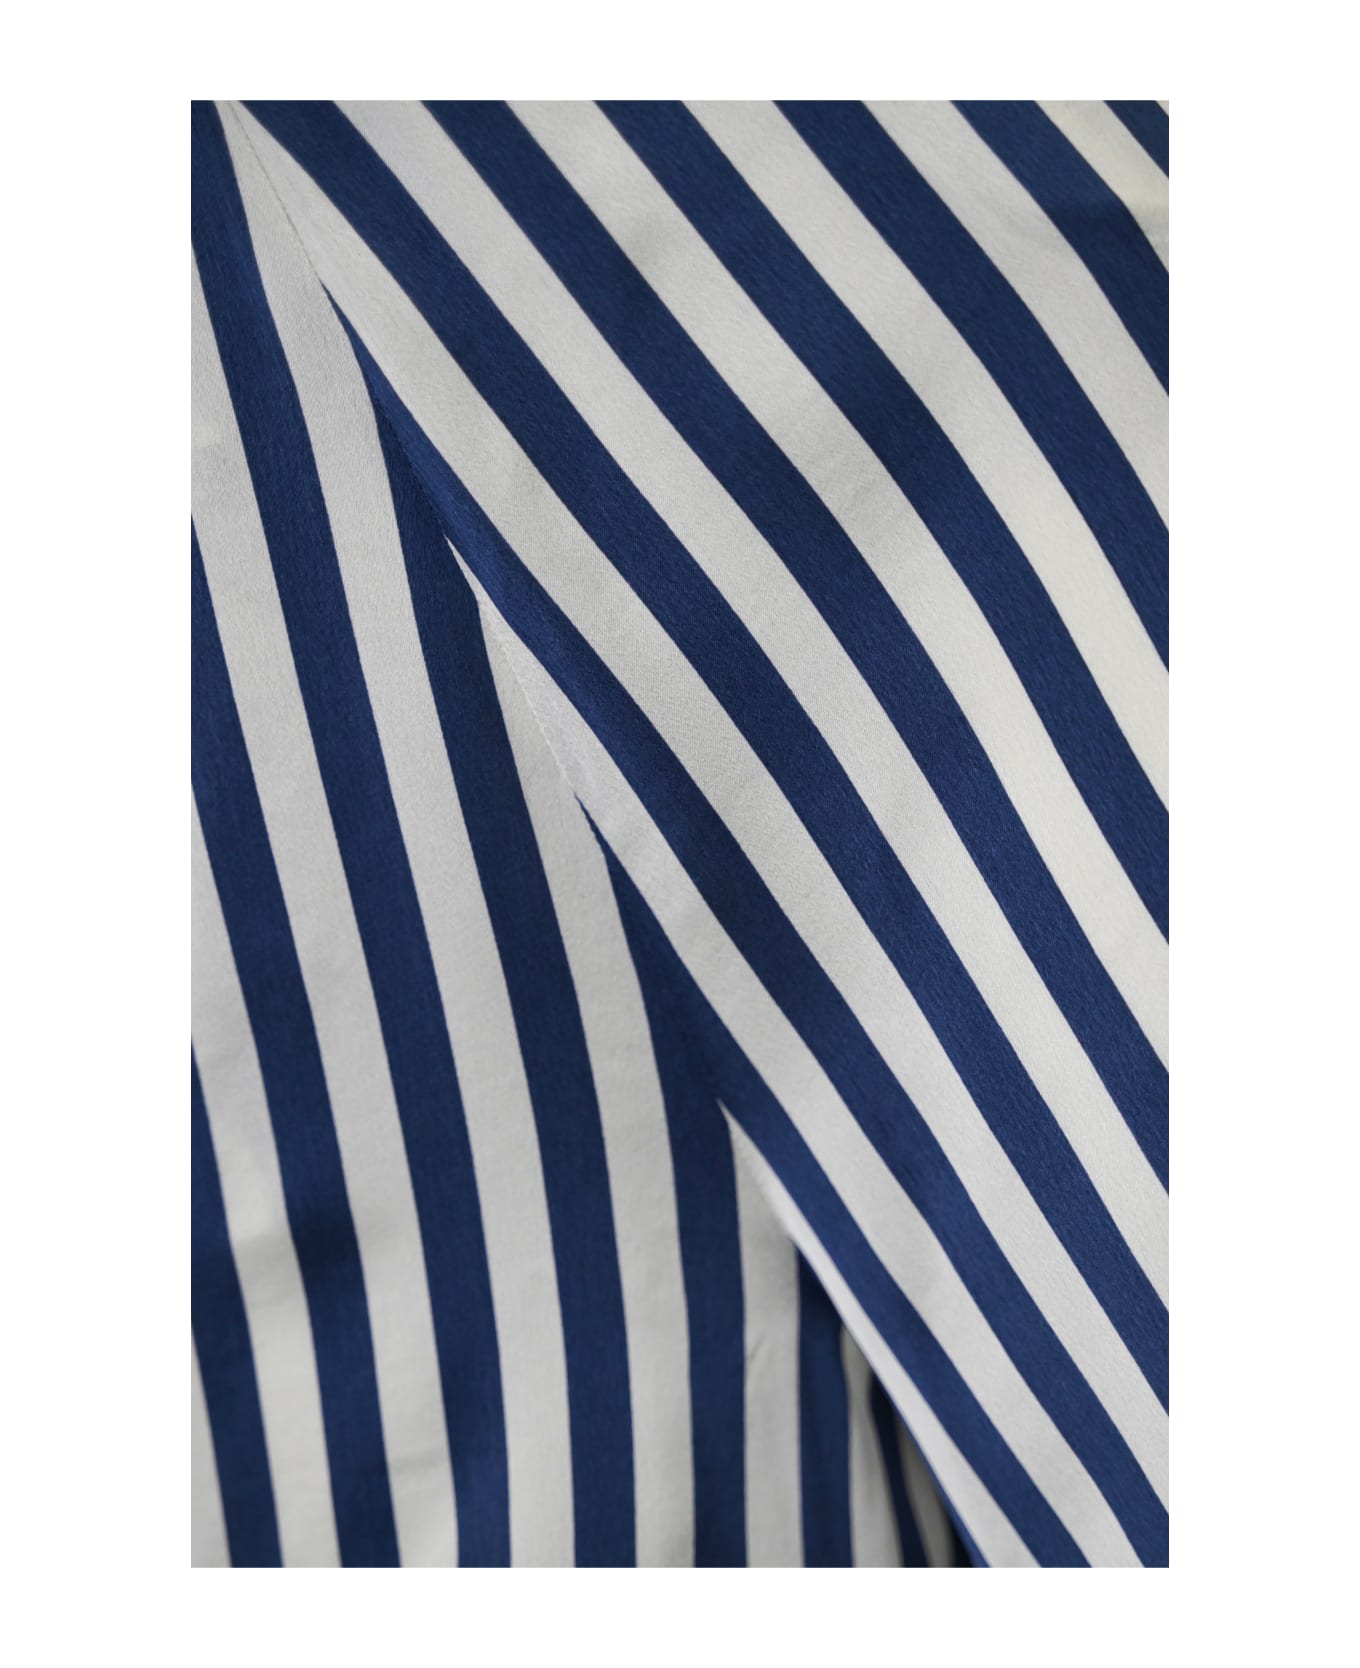 MVP Wardrobe Le Galion Shorts In Viscose - Cream/deep blue